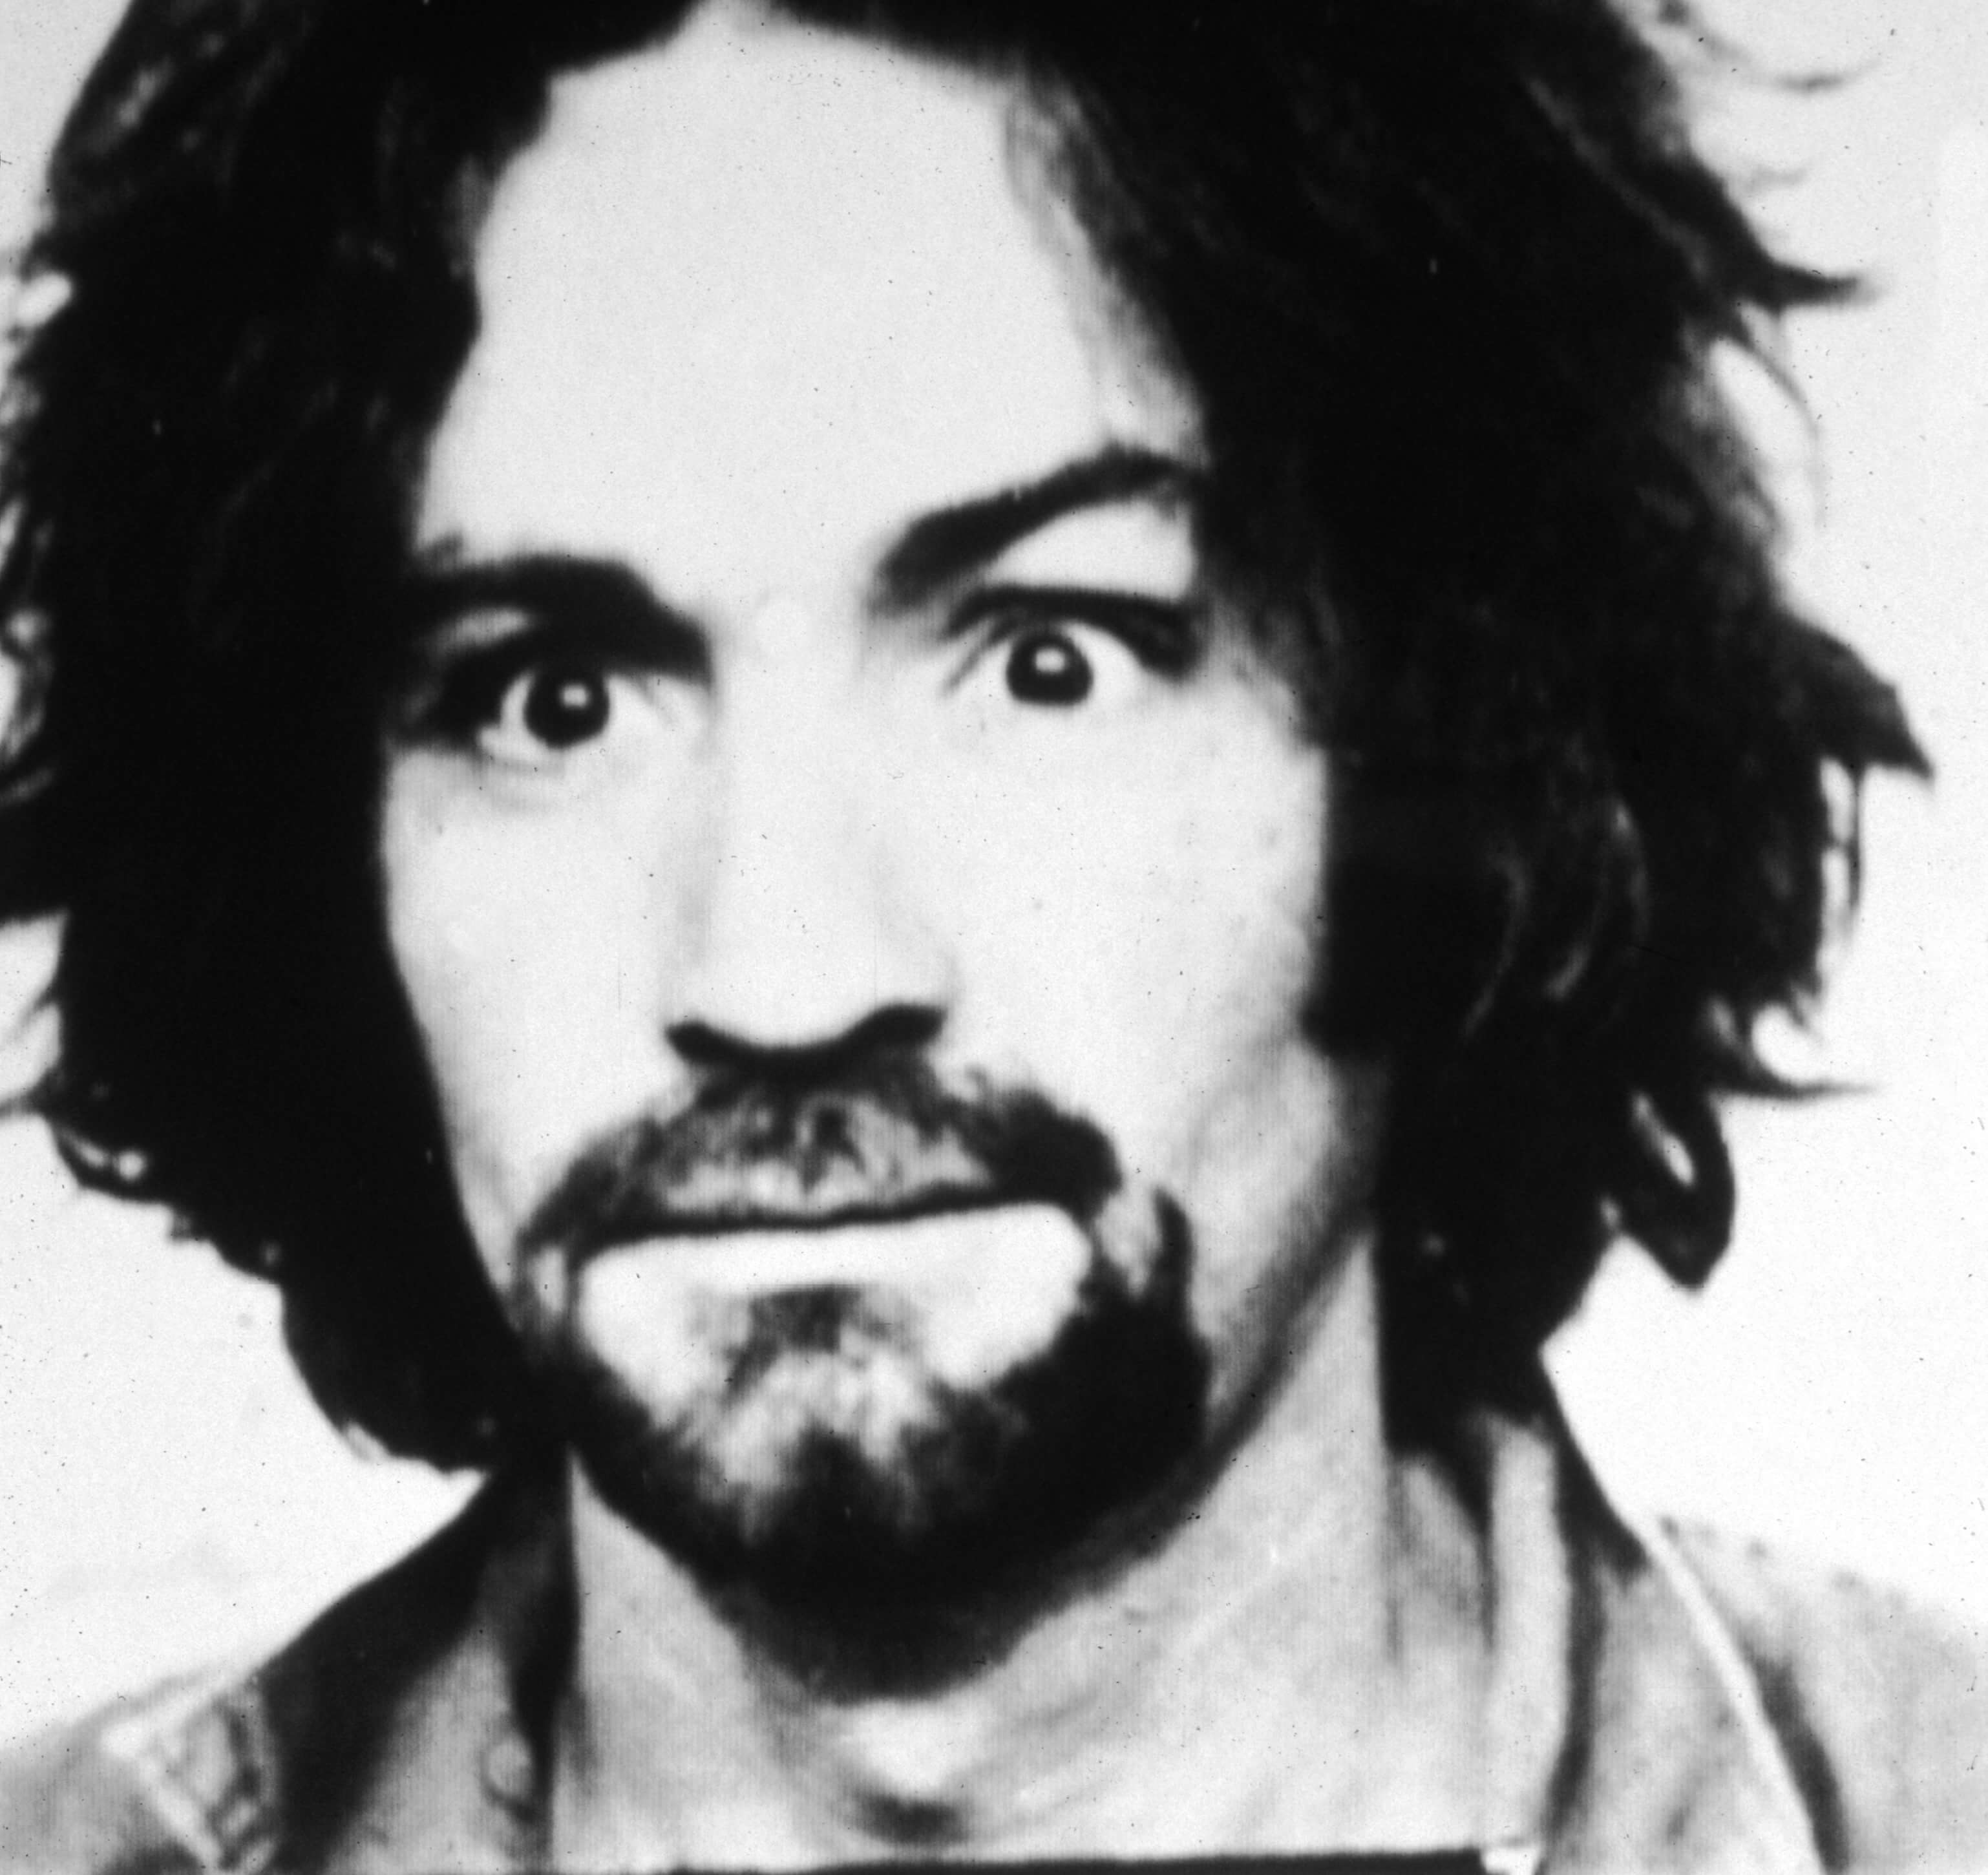 A black-and-white mug shot of Charles Manson